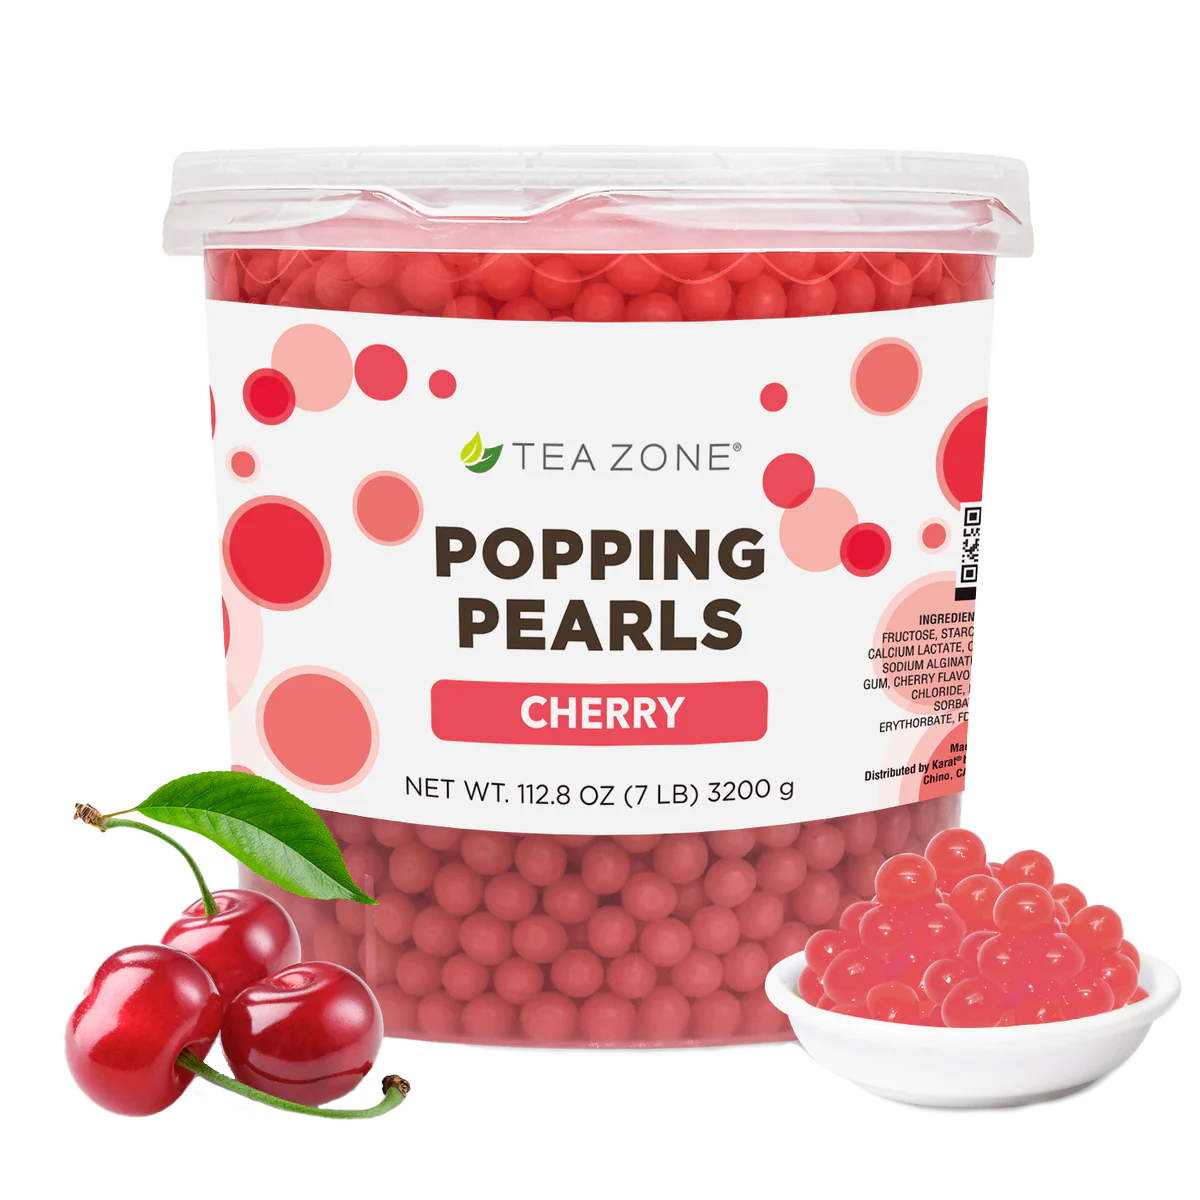 Tea Zone Cherry Popping Boba